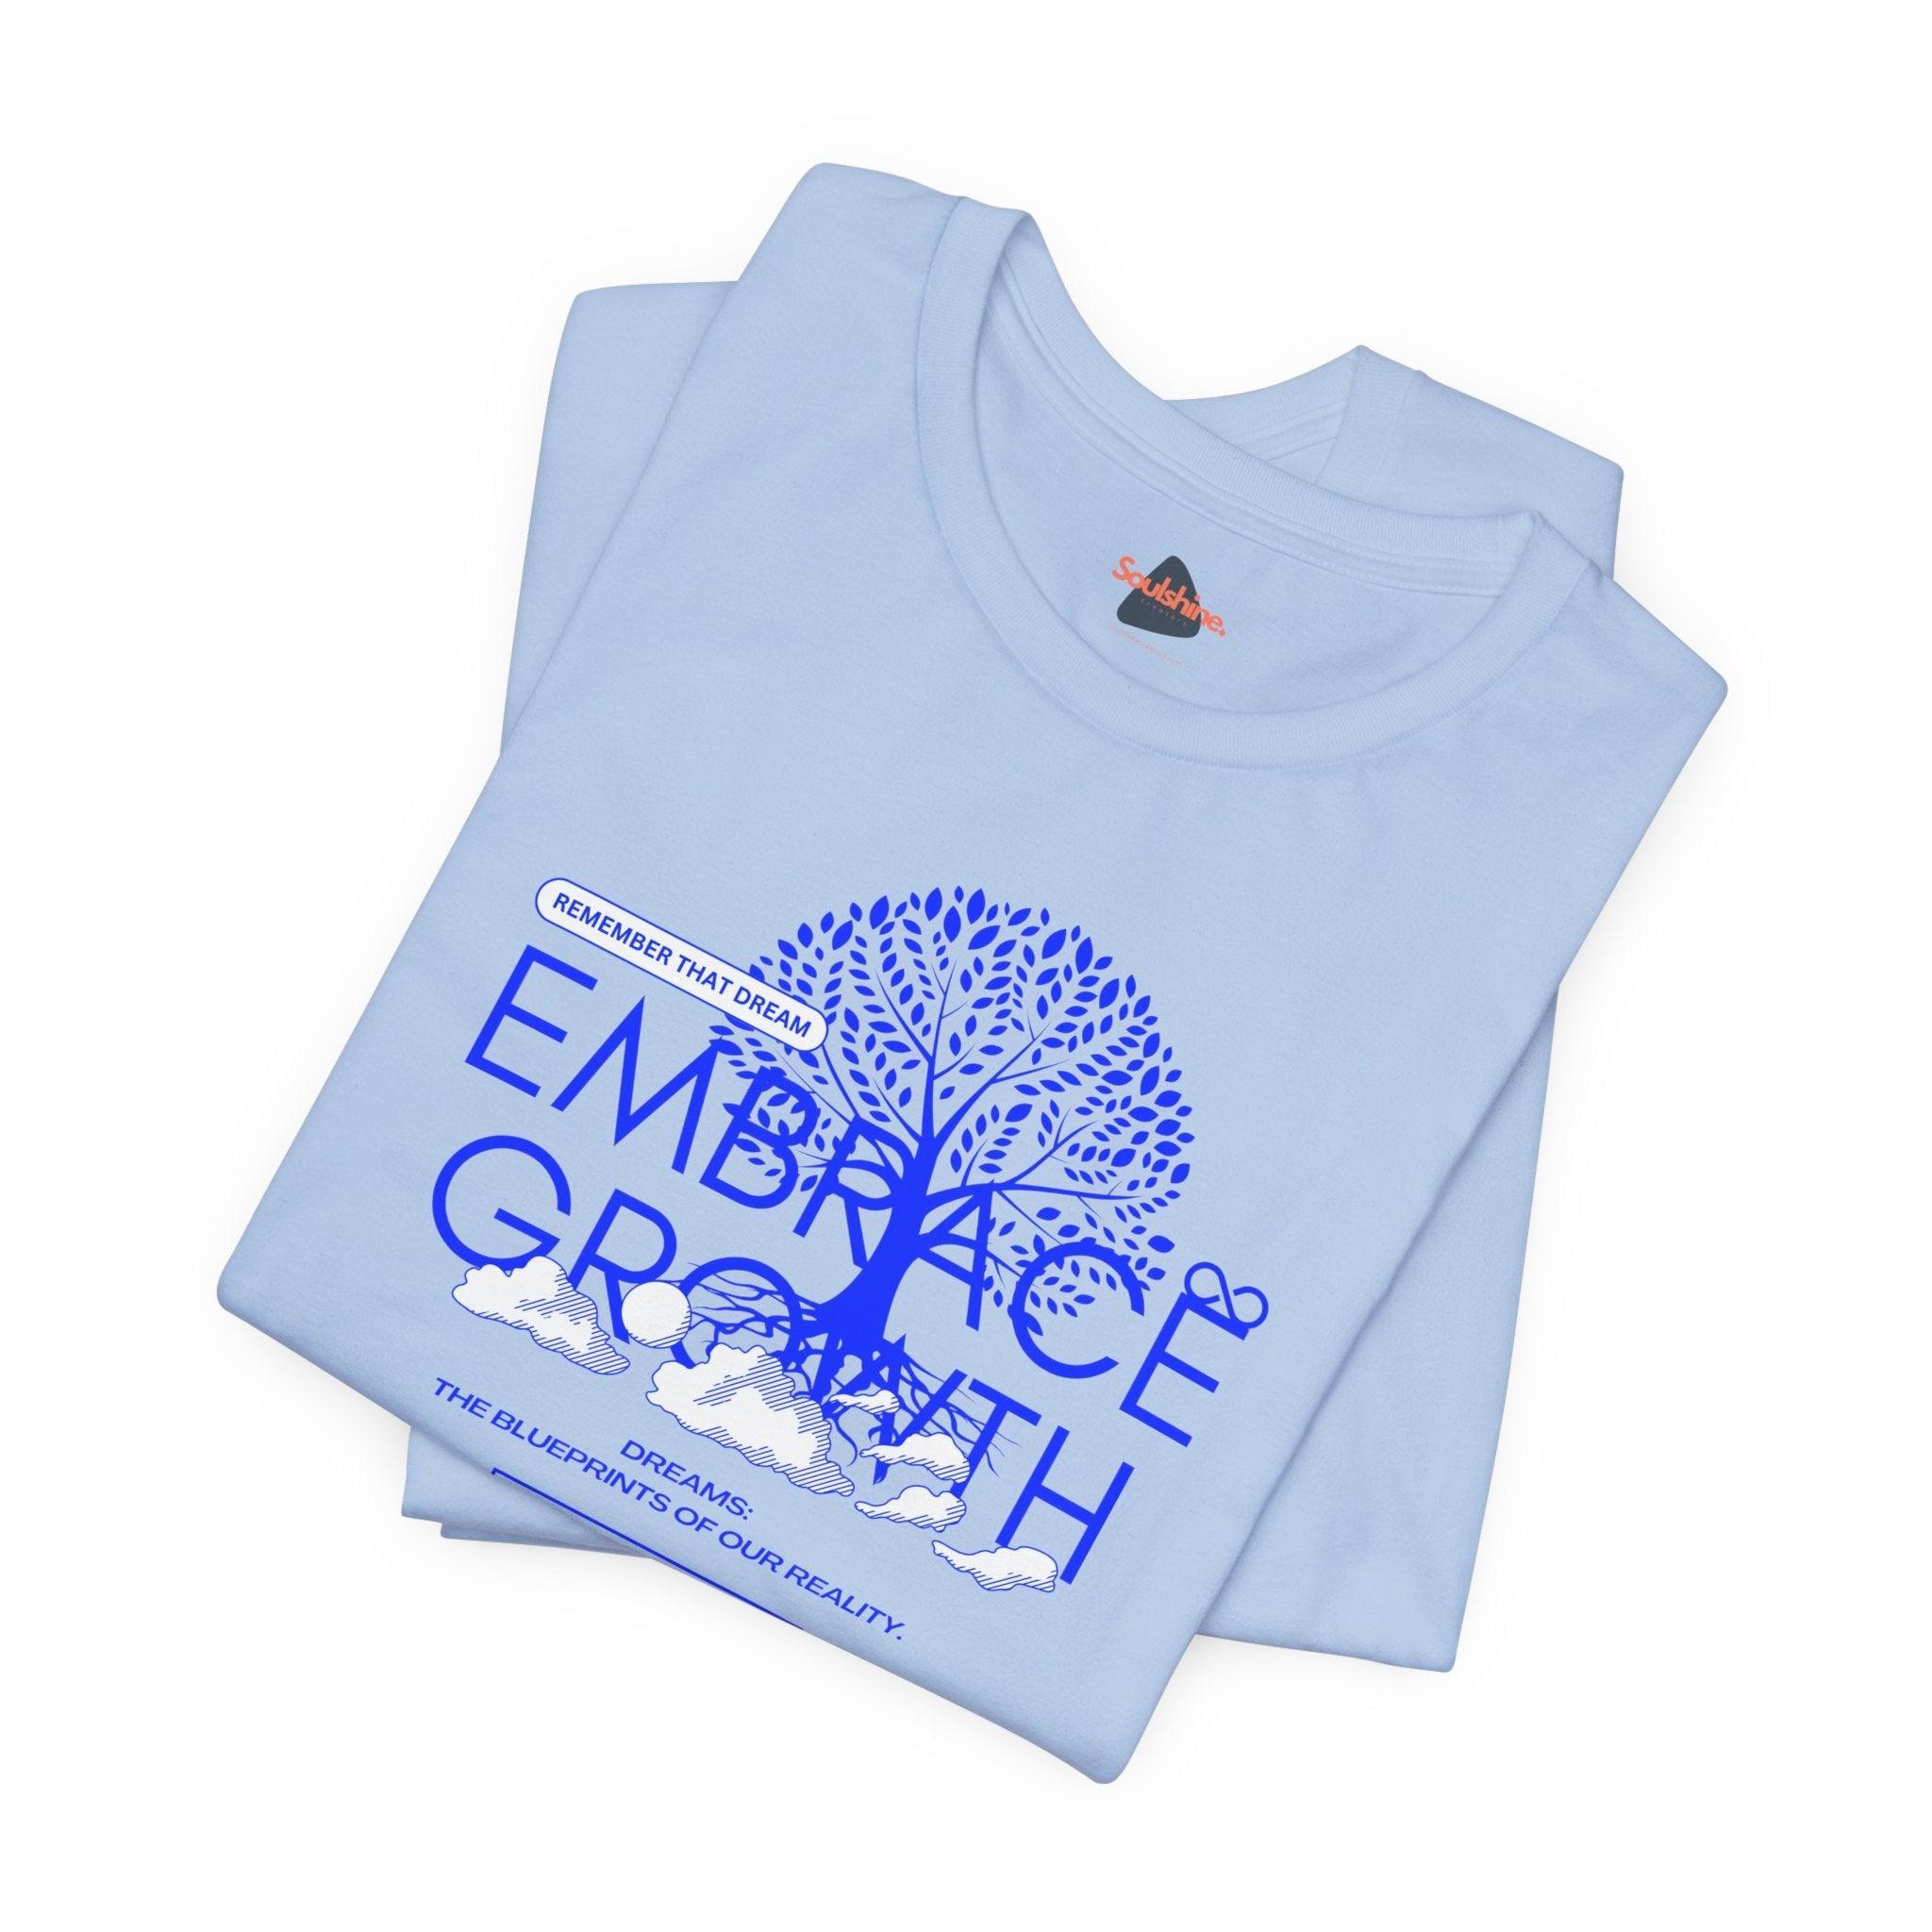 Embrace growth - Soulshinecreators - Unisex Jersey Short Sleeve Tee - US T-Shirt by Soulshinecreators | Soulshinecreators